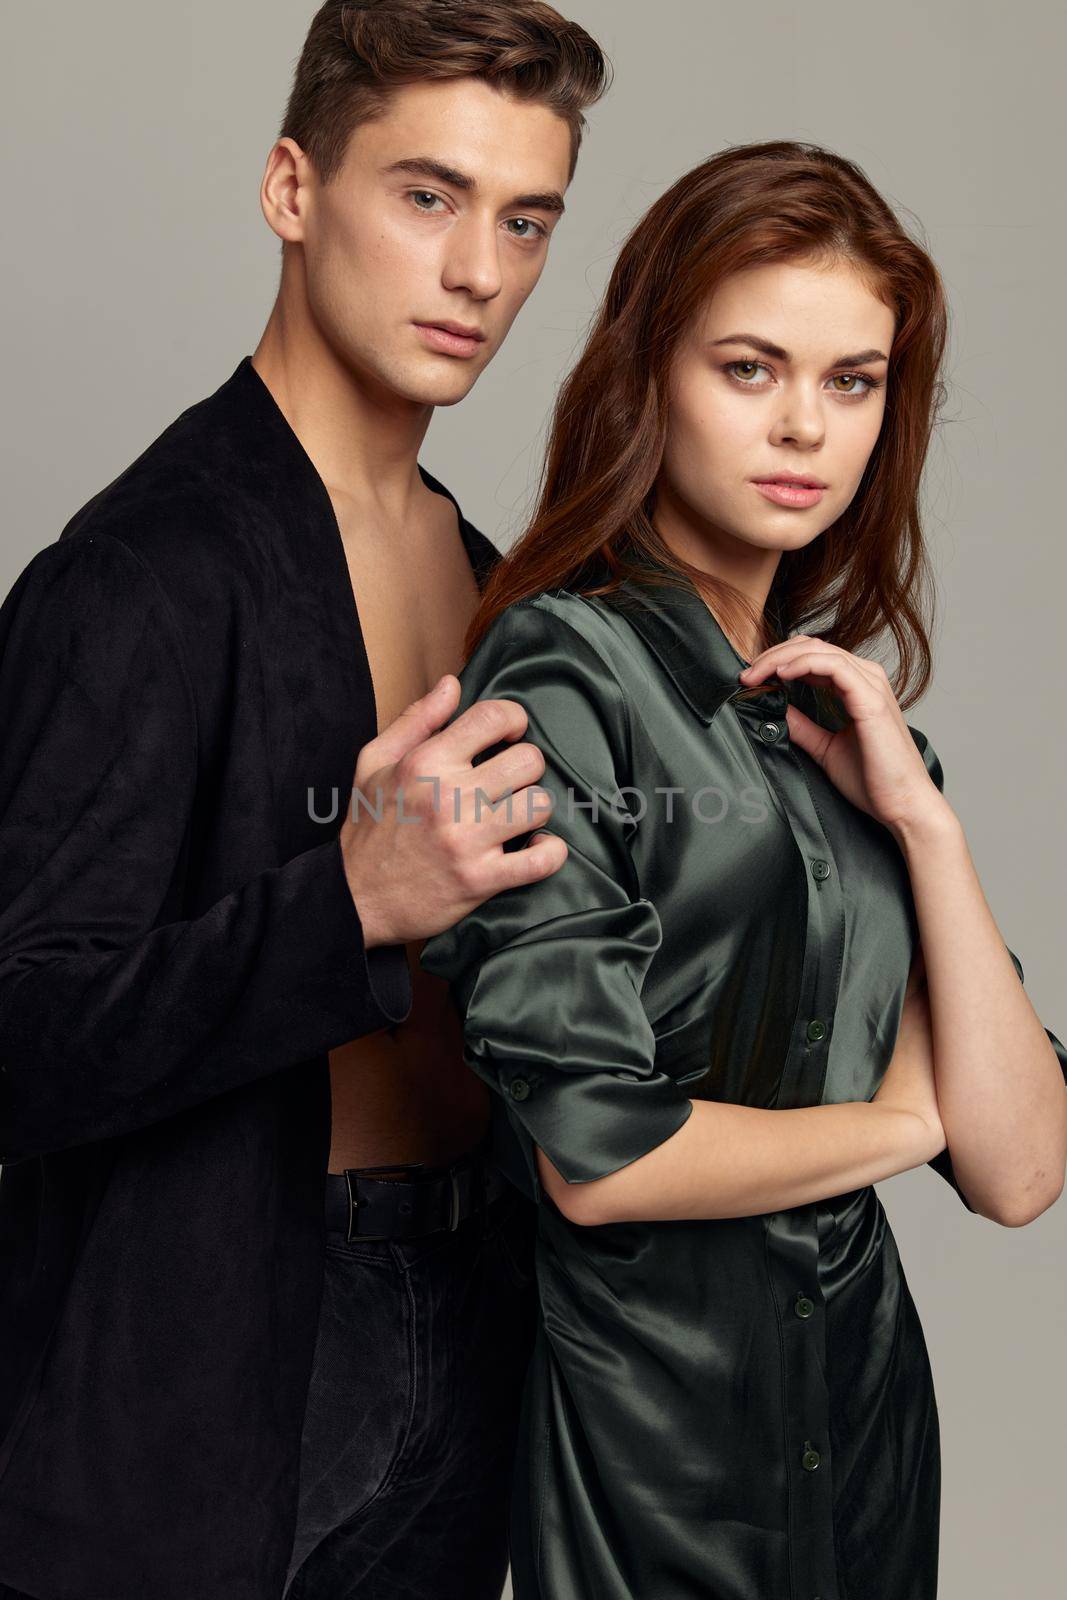 Young couple portrait elegant style attractiveness attitude fashion by SHOTPRIME